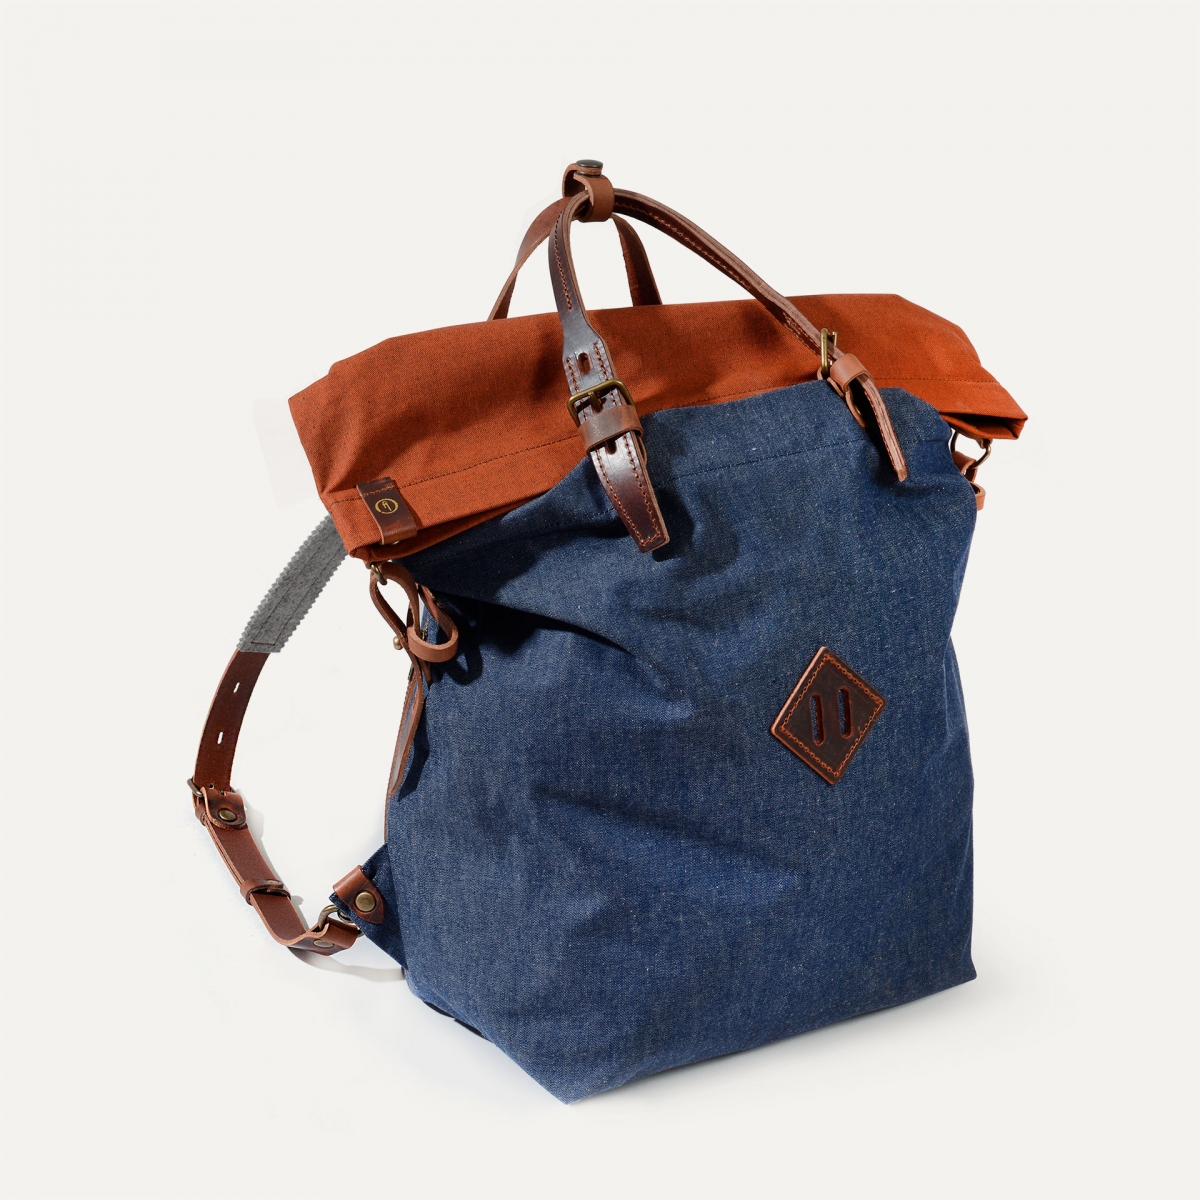 30L Woody backpack - Denim/Terra cotta (image n°1)